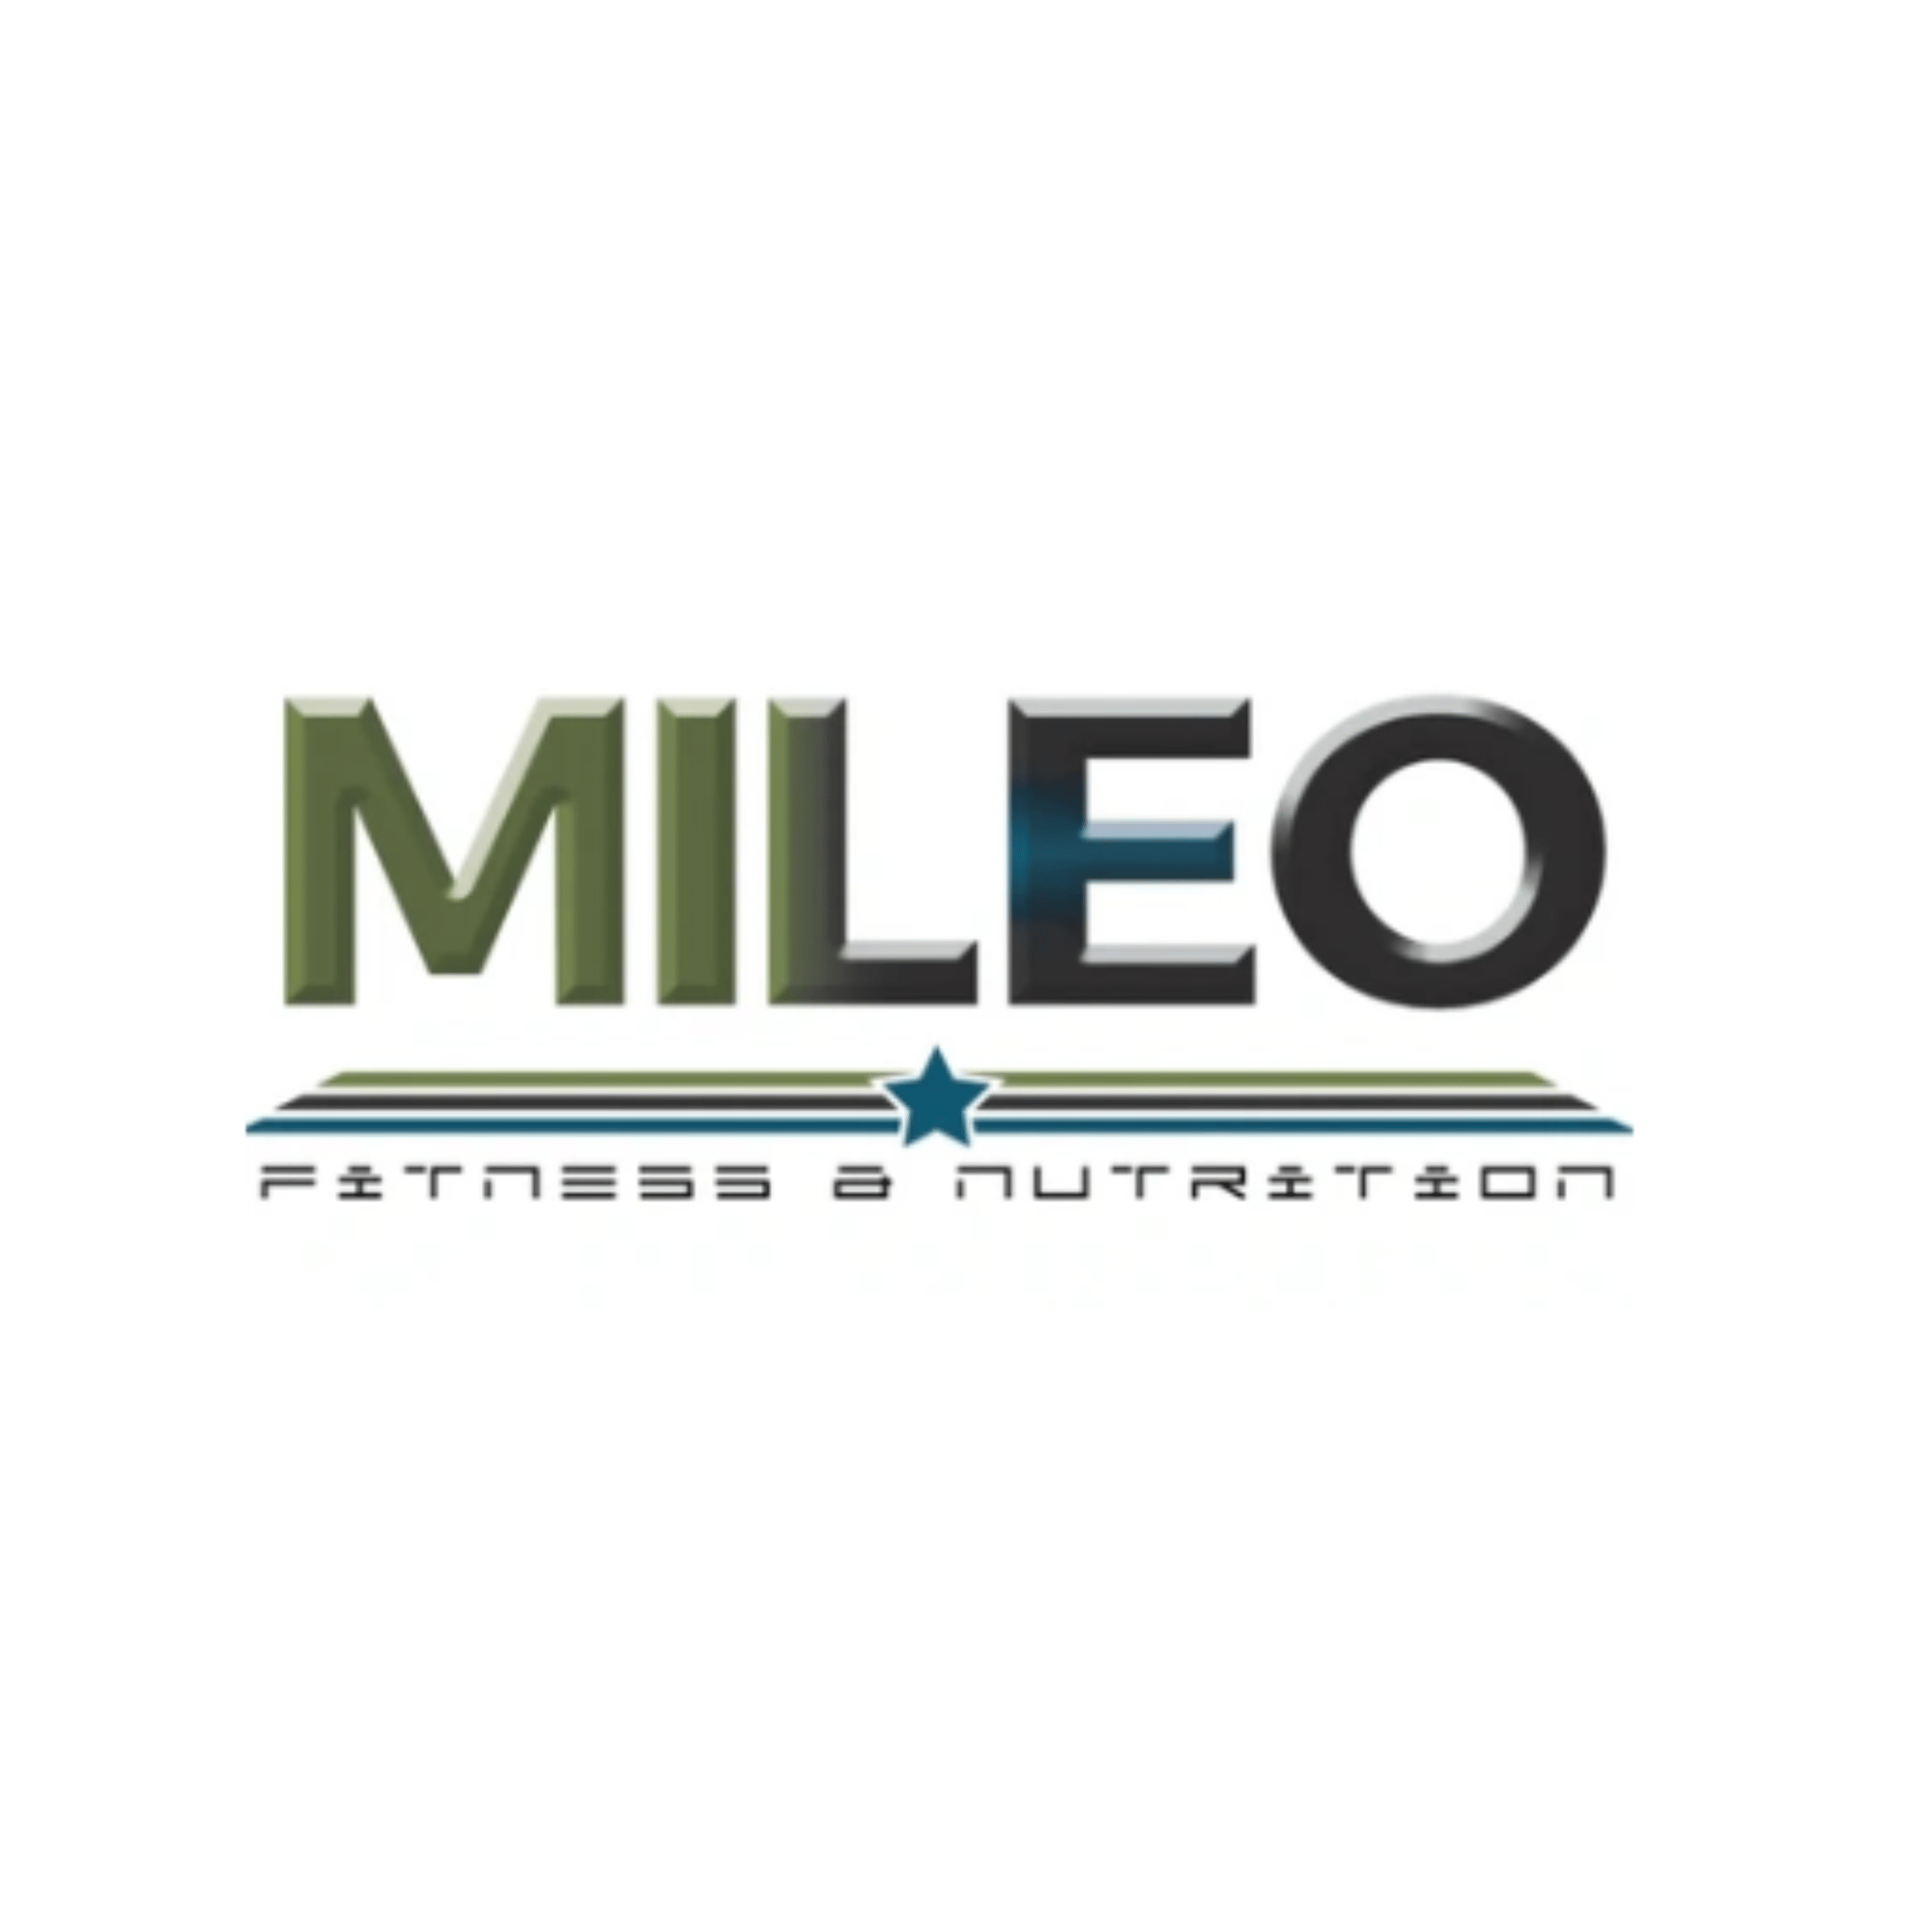 MiLEO Fitness & Nutrition